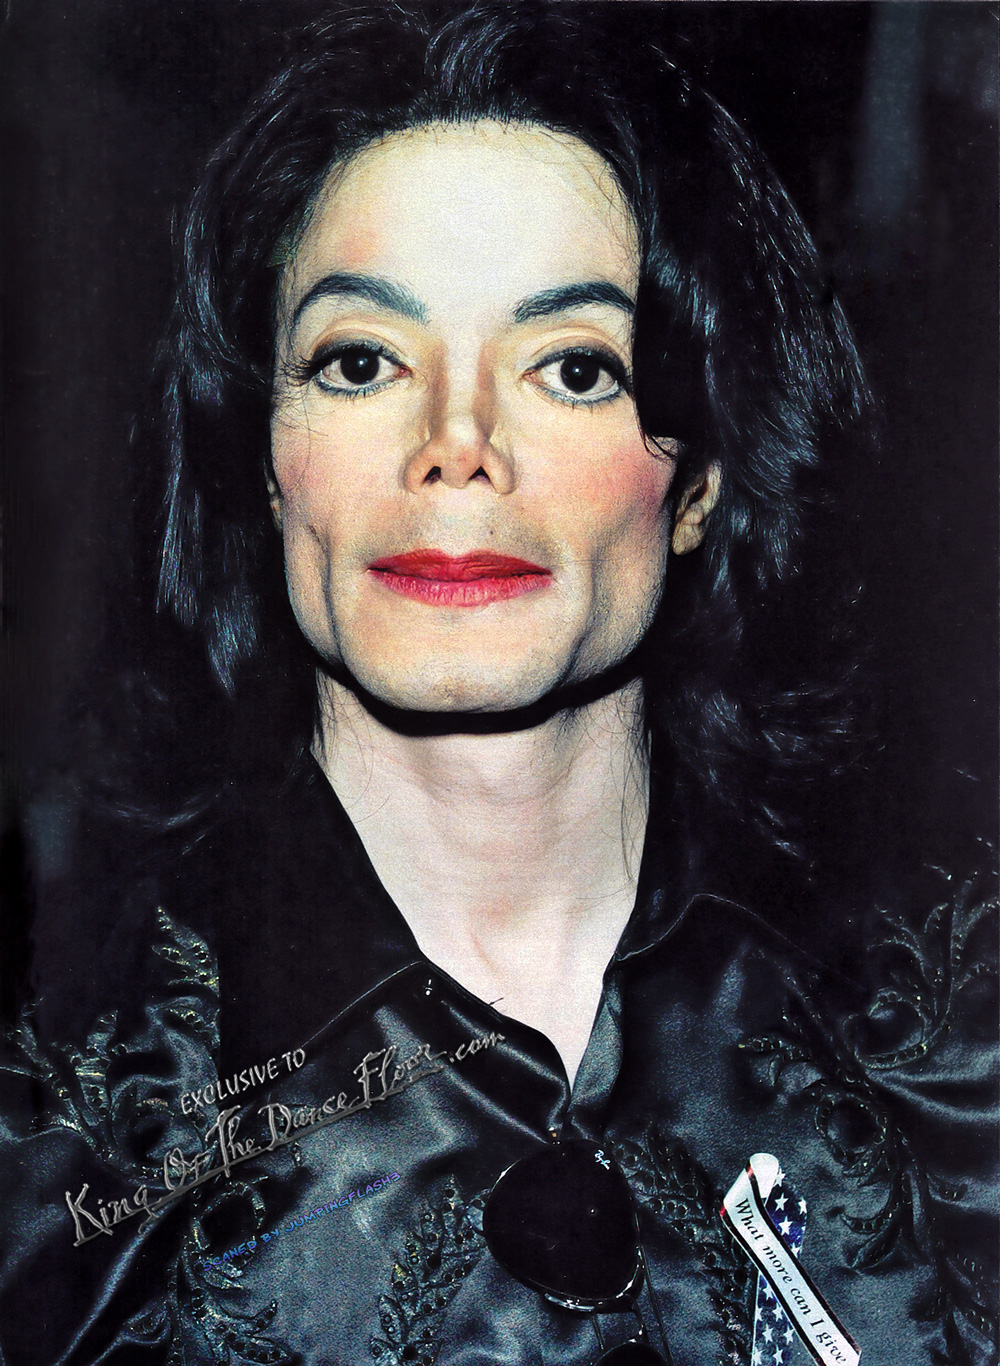 Michael Jackson - Biography